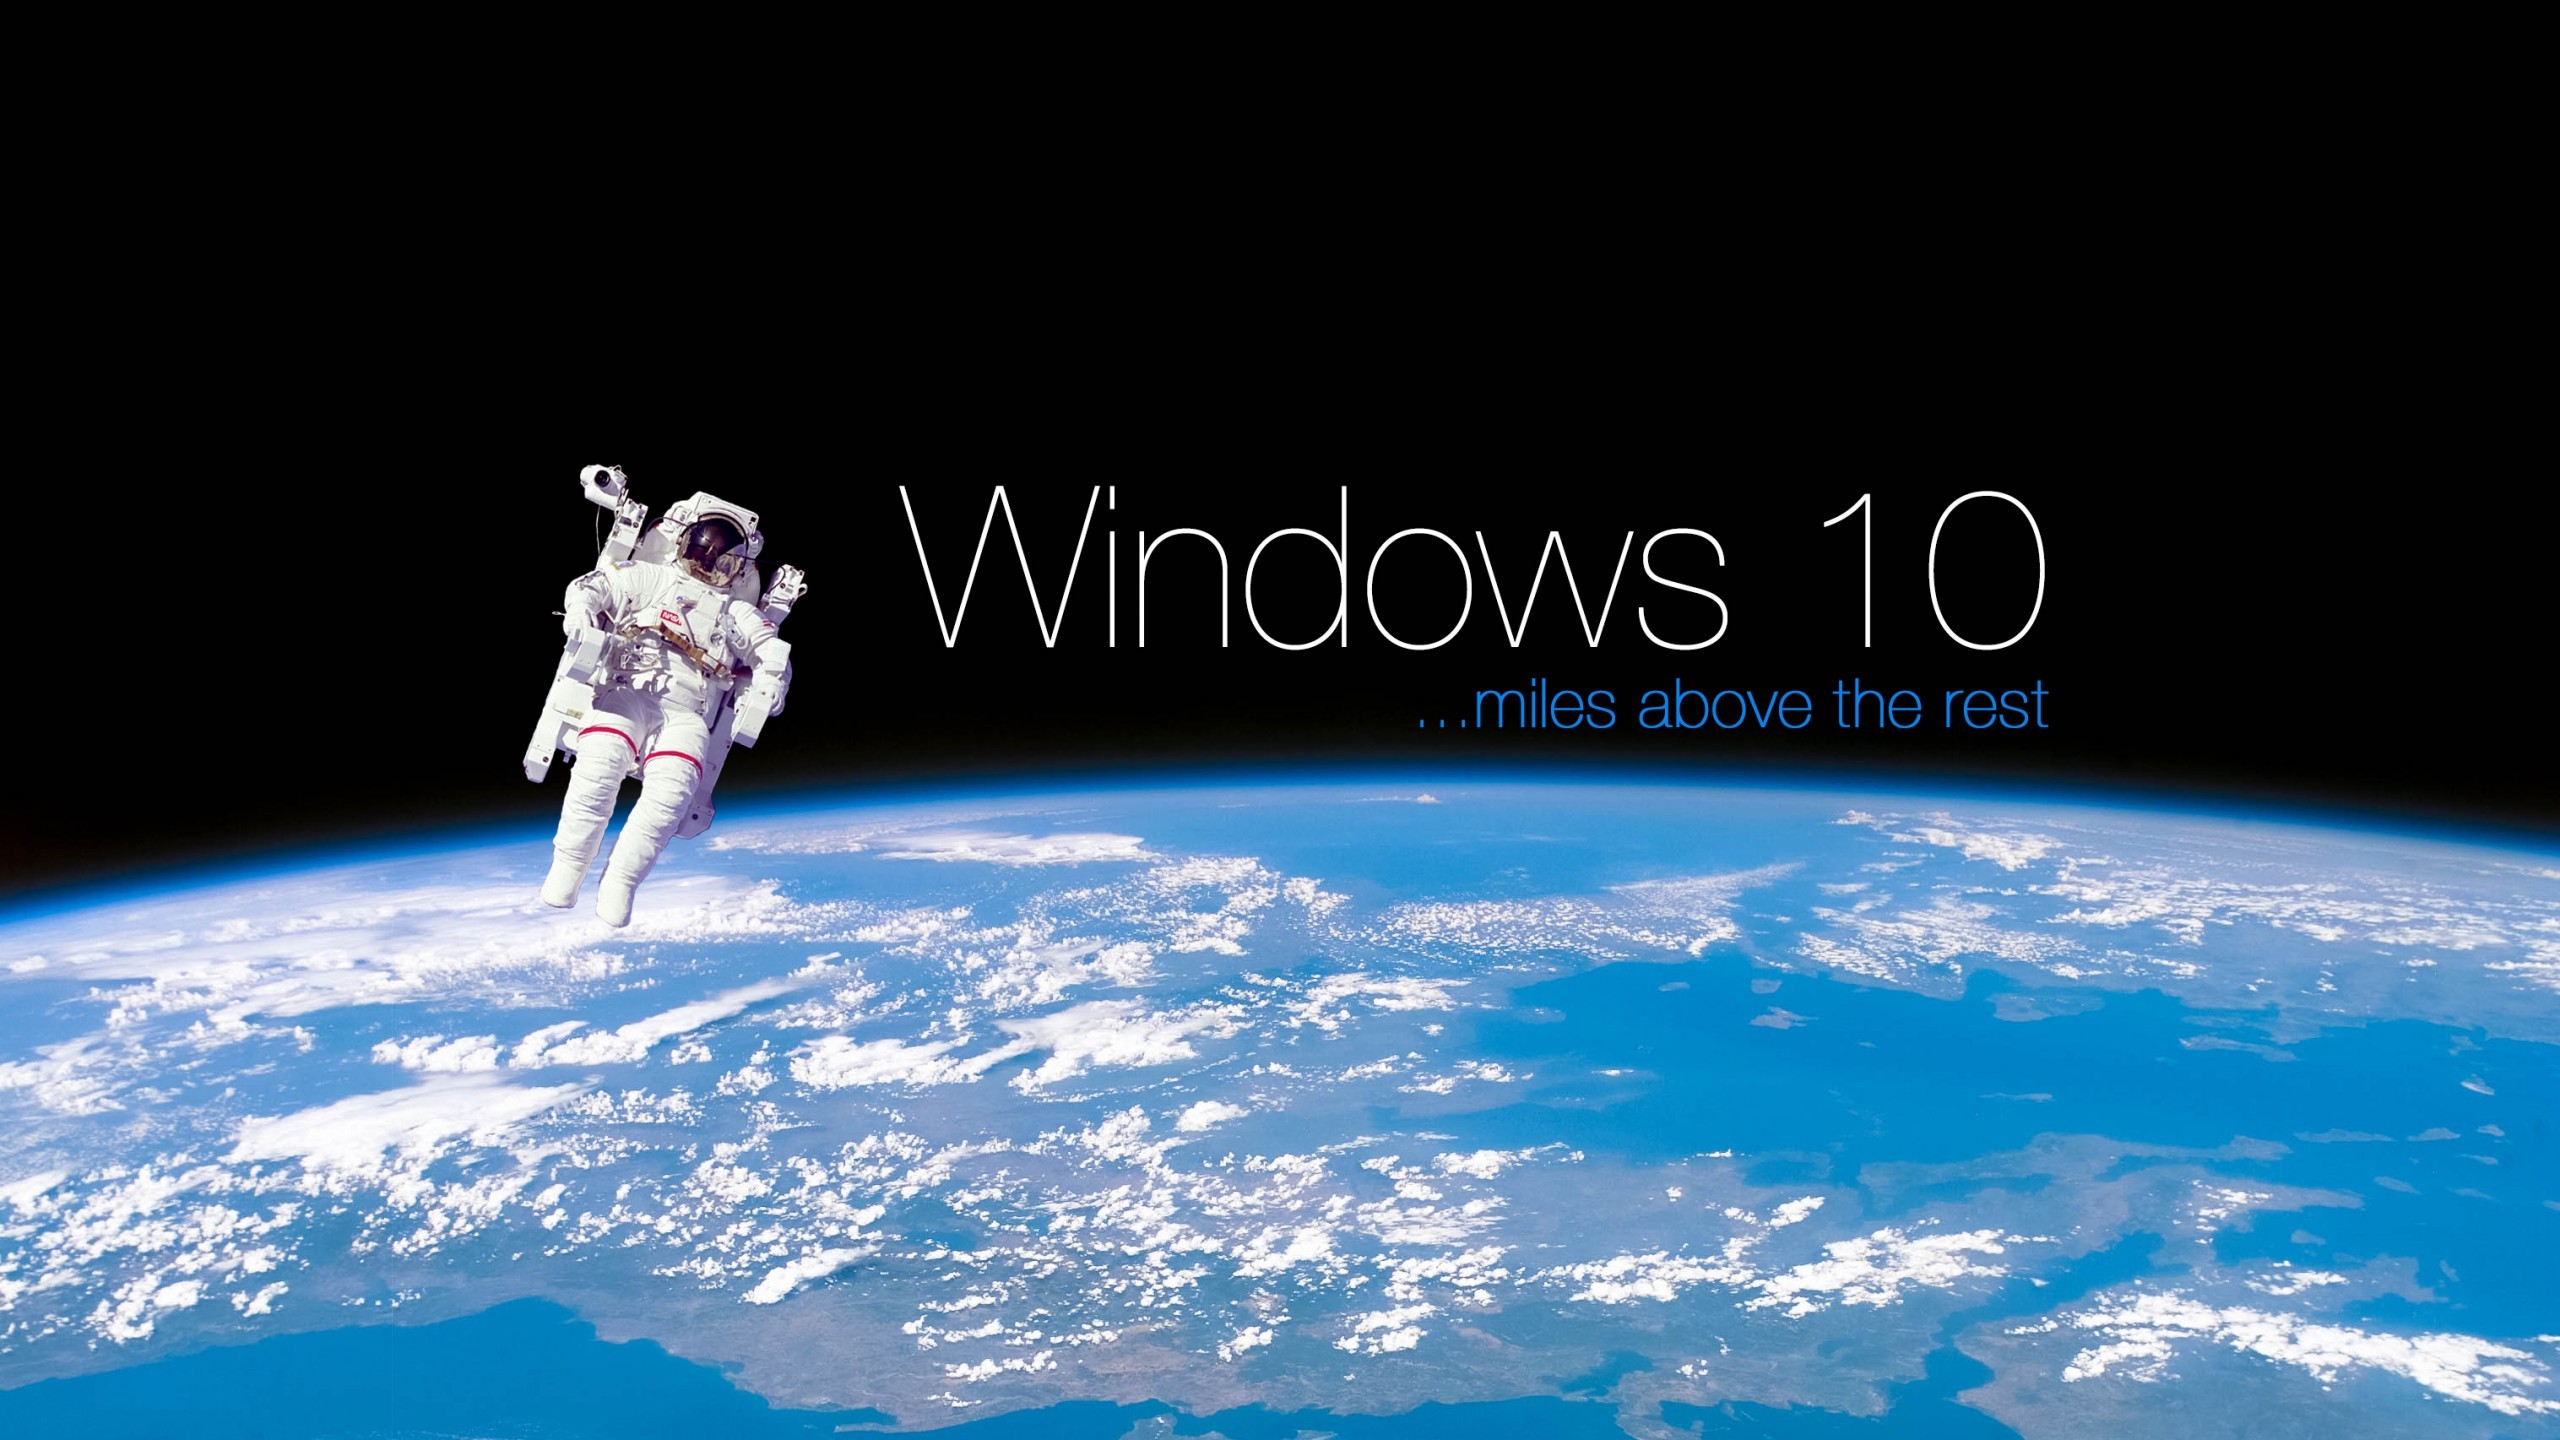 2560x1440 Windows 10 space 4k wallpaper